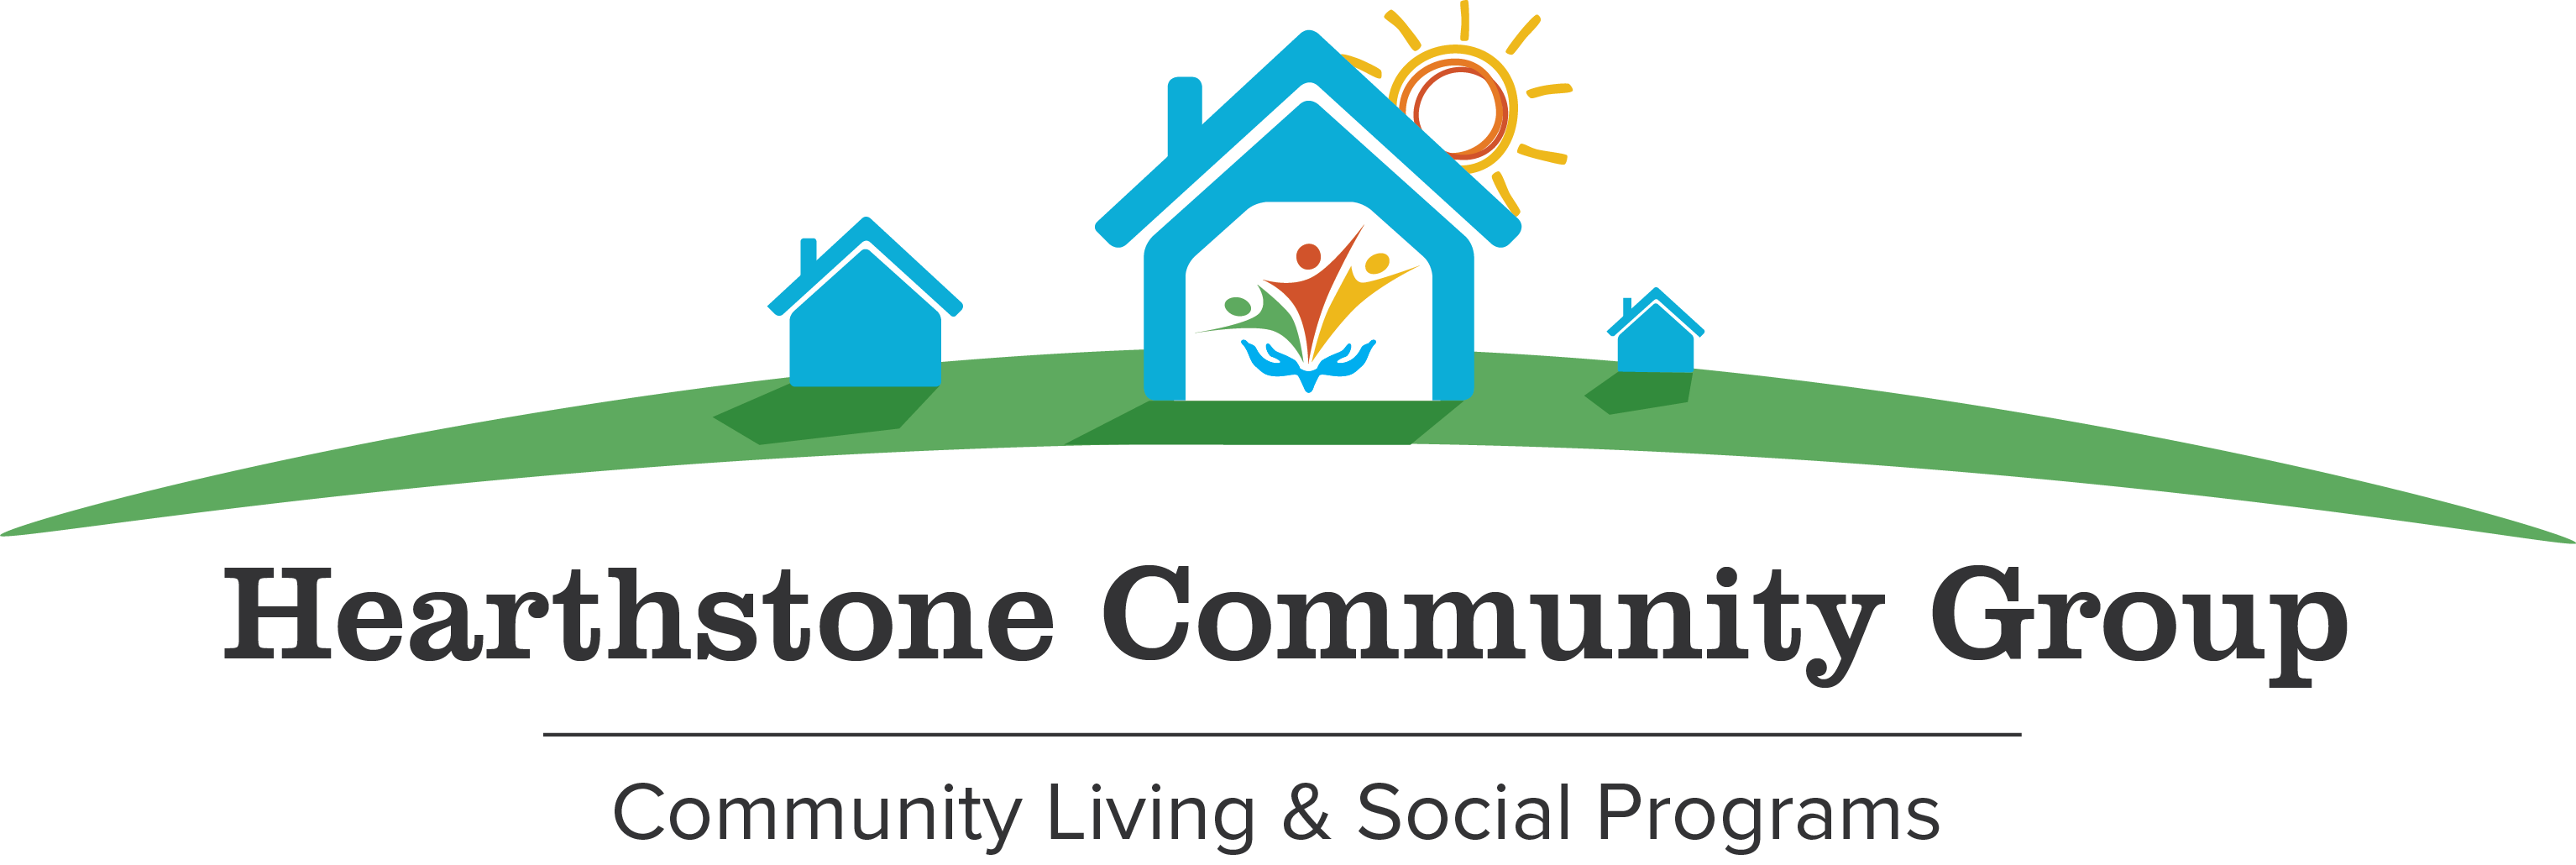 Hearthstone Community Group Inc.